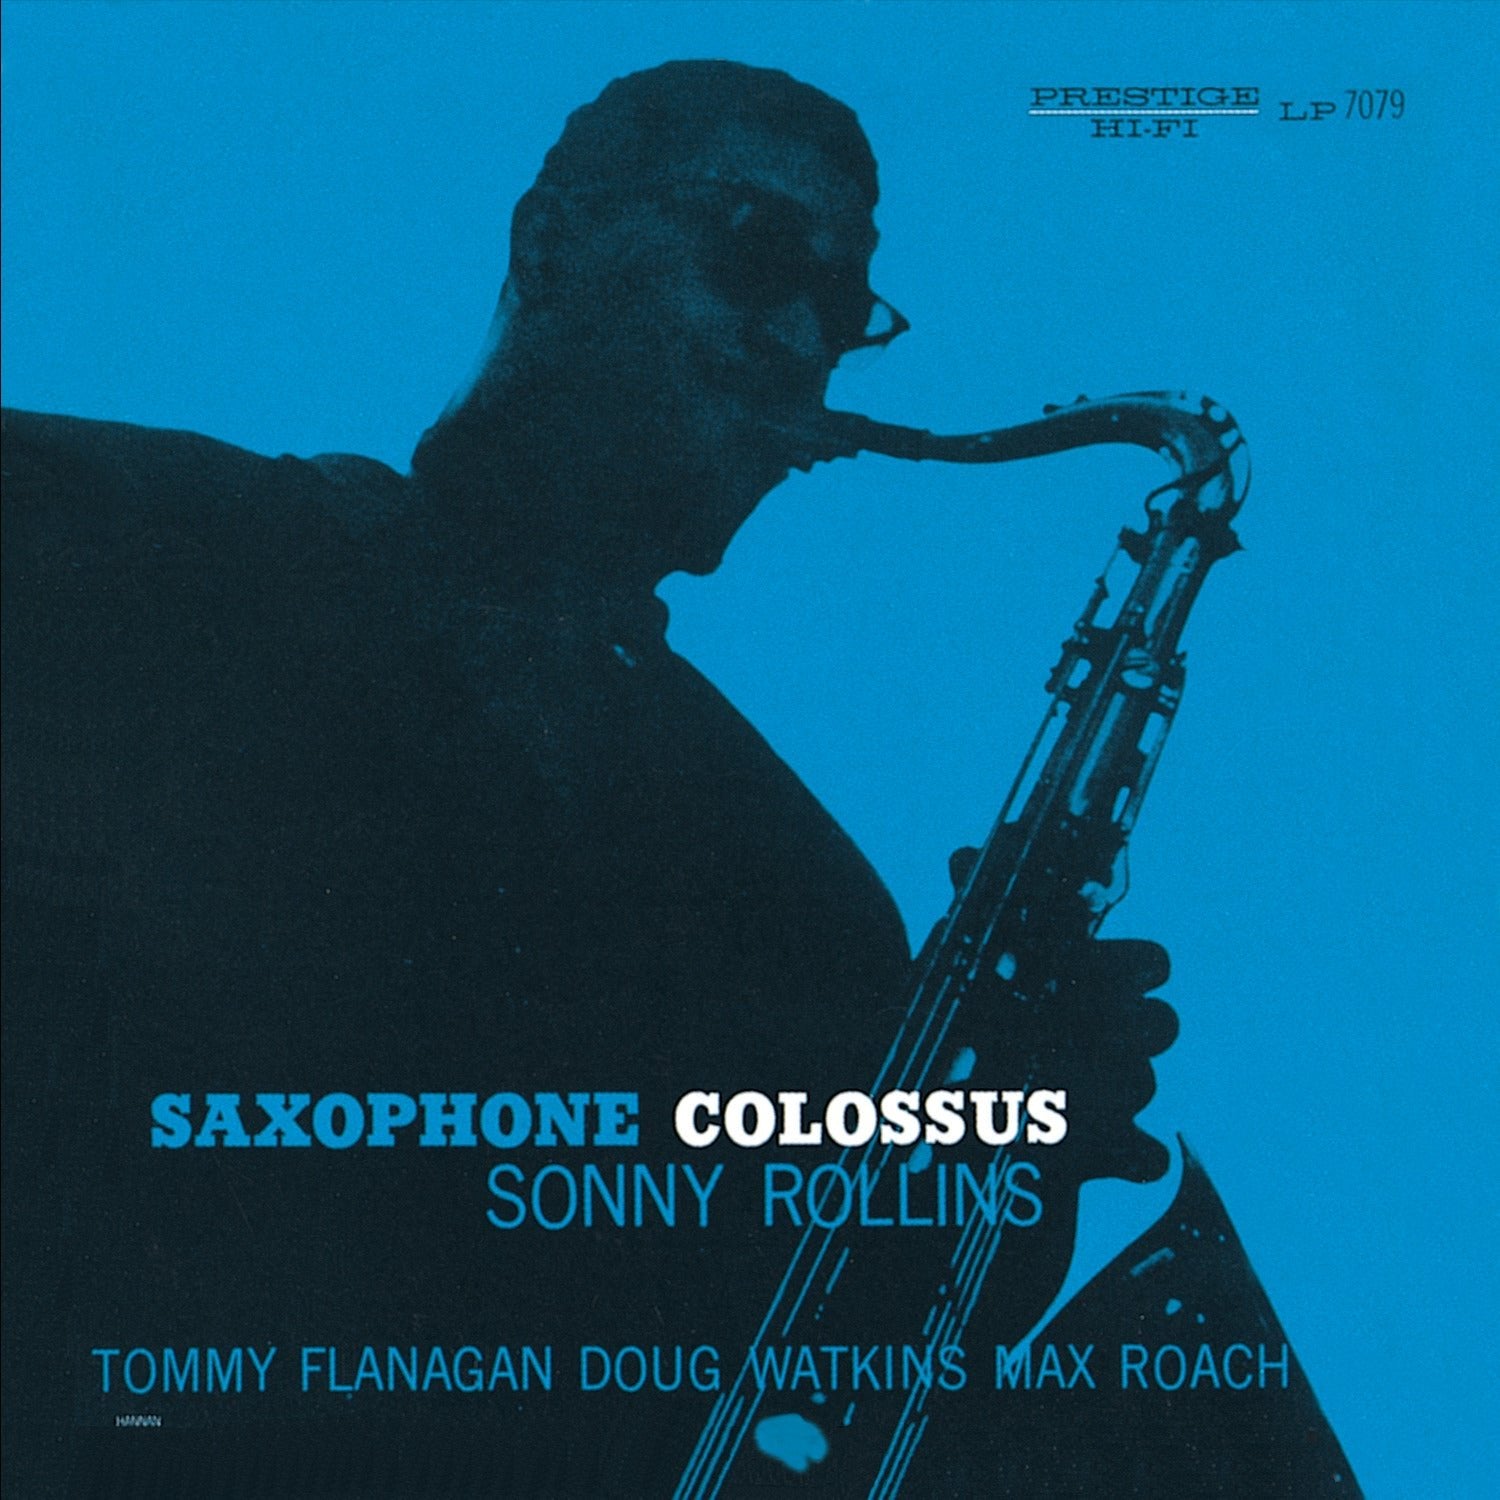 Sonny Rollins - Saxophone Colossus - 33RPM